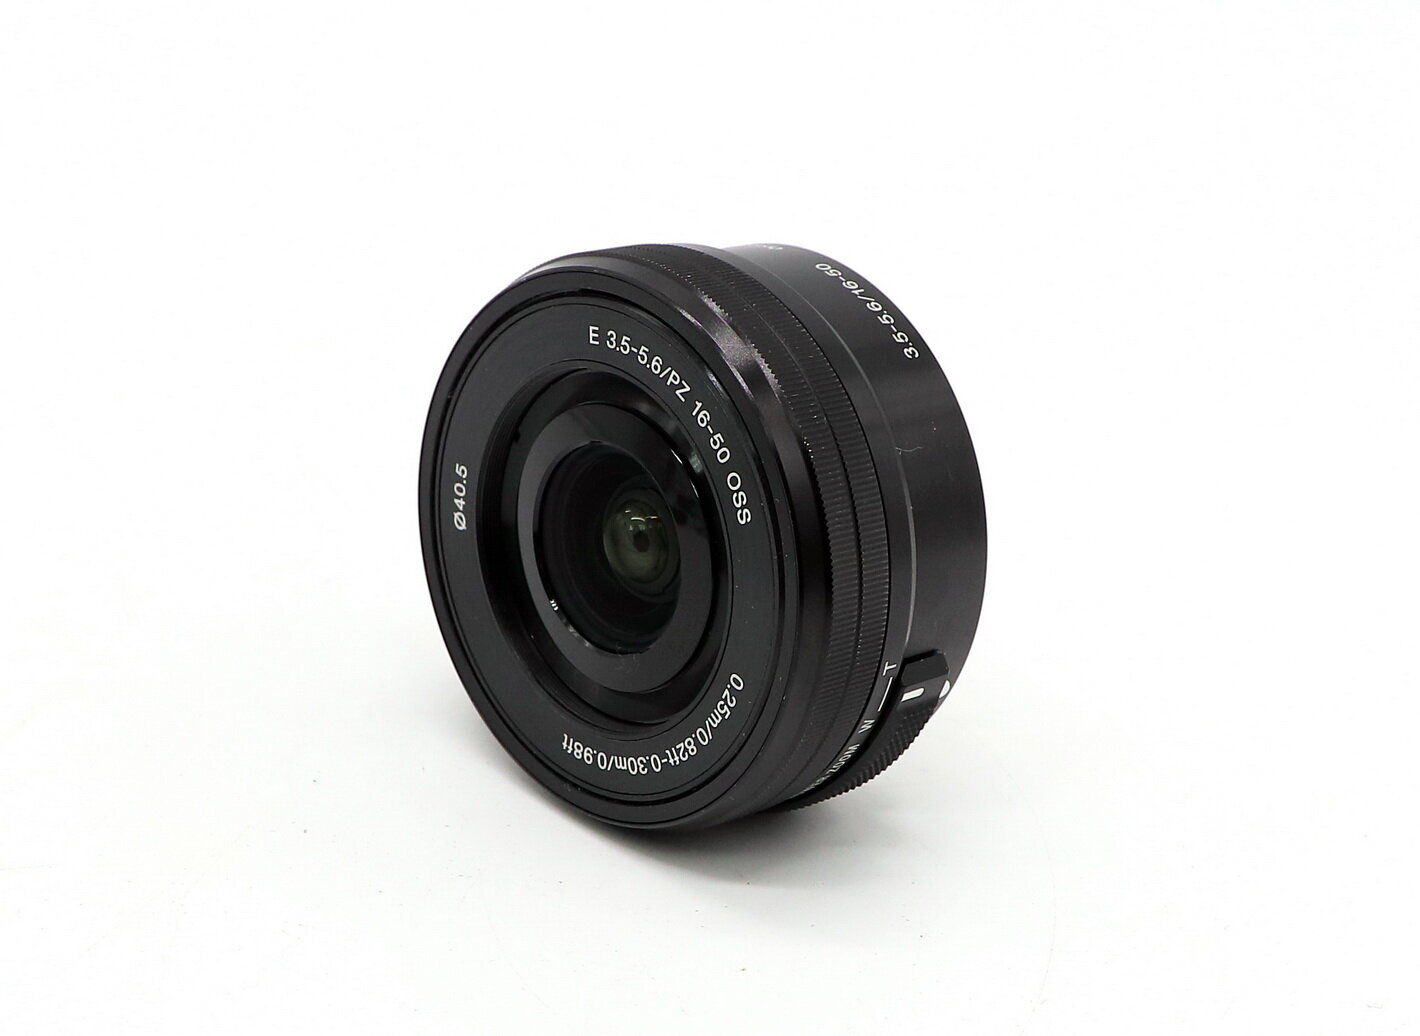 Sony 16-50mm f/3.5-5.6 (SELP1650)